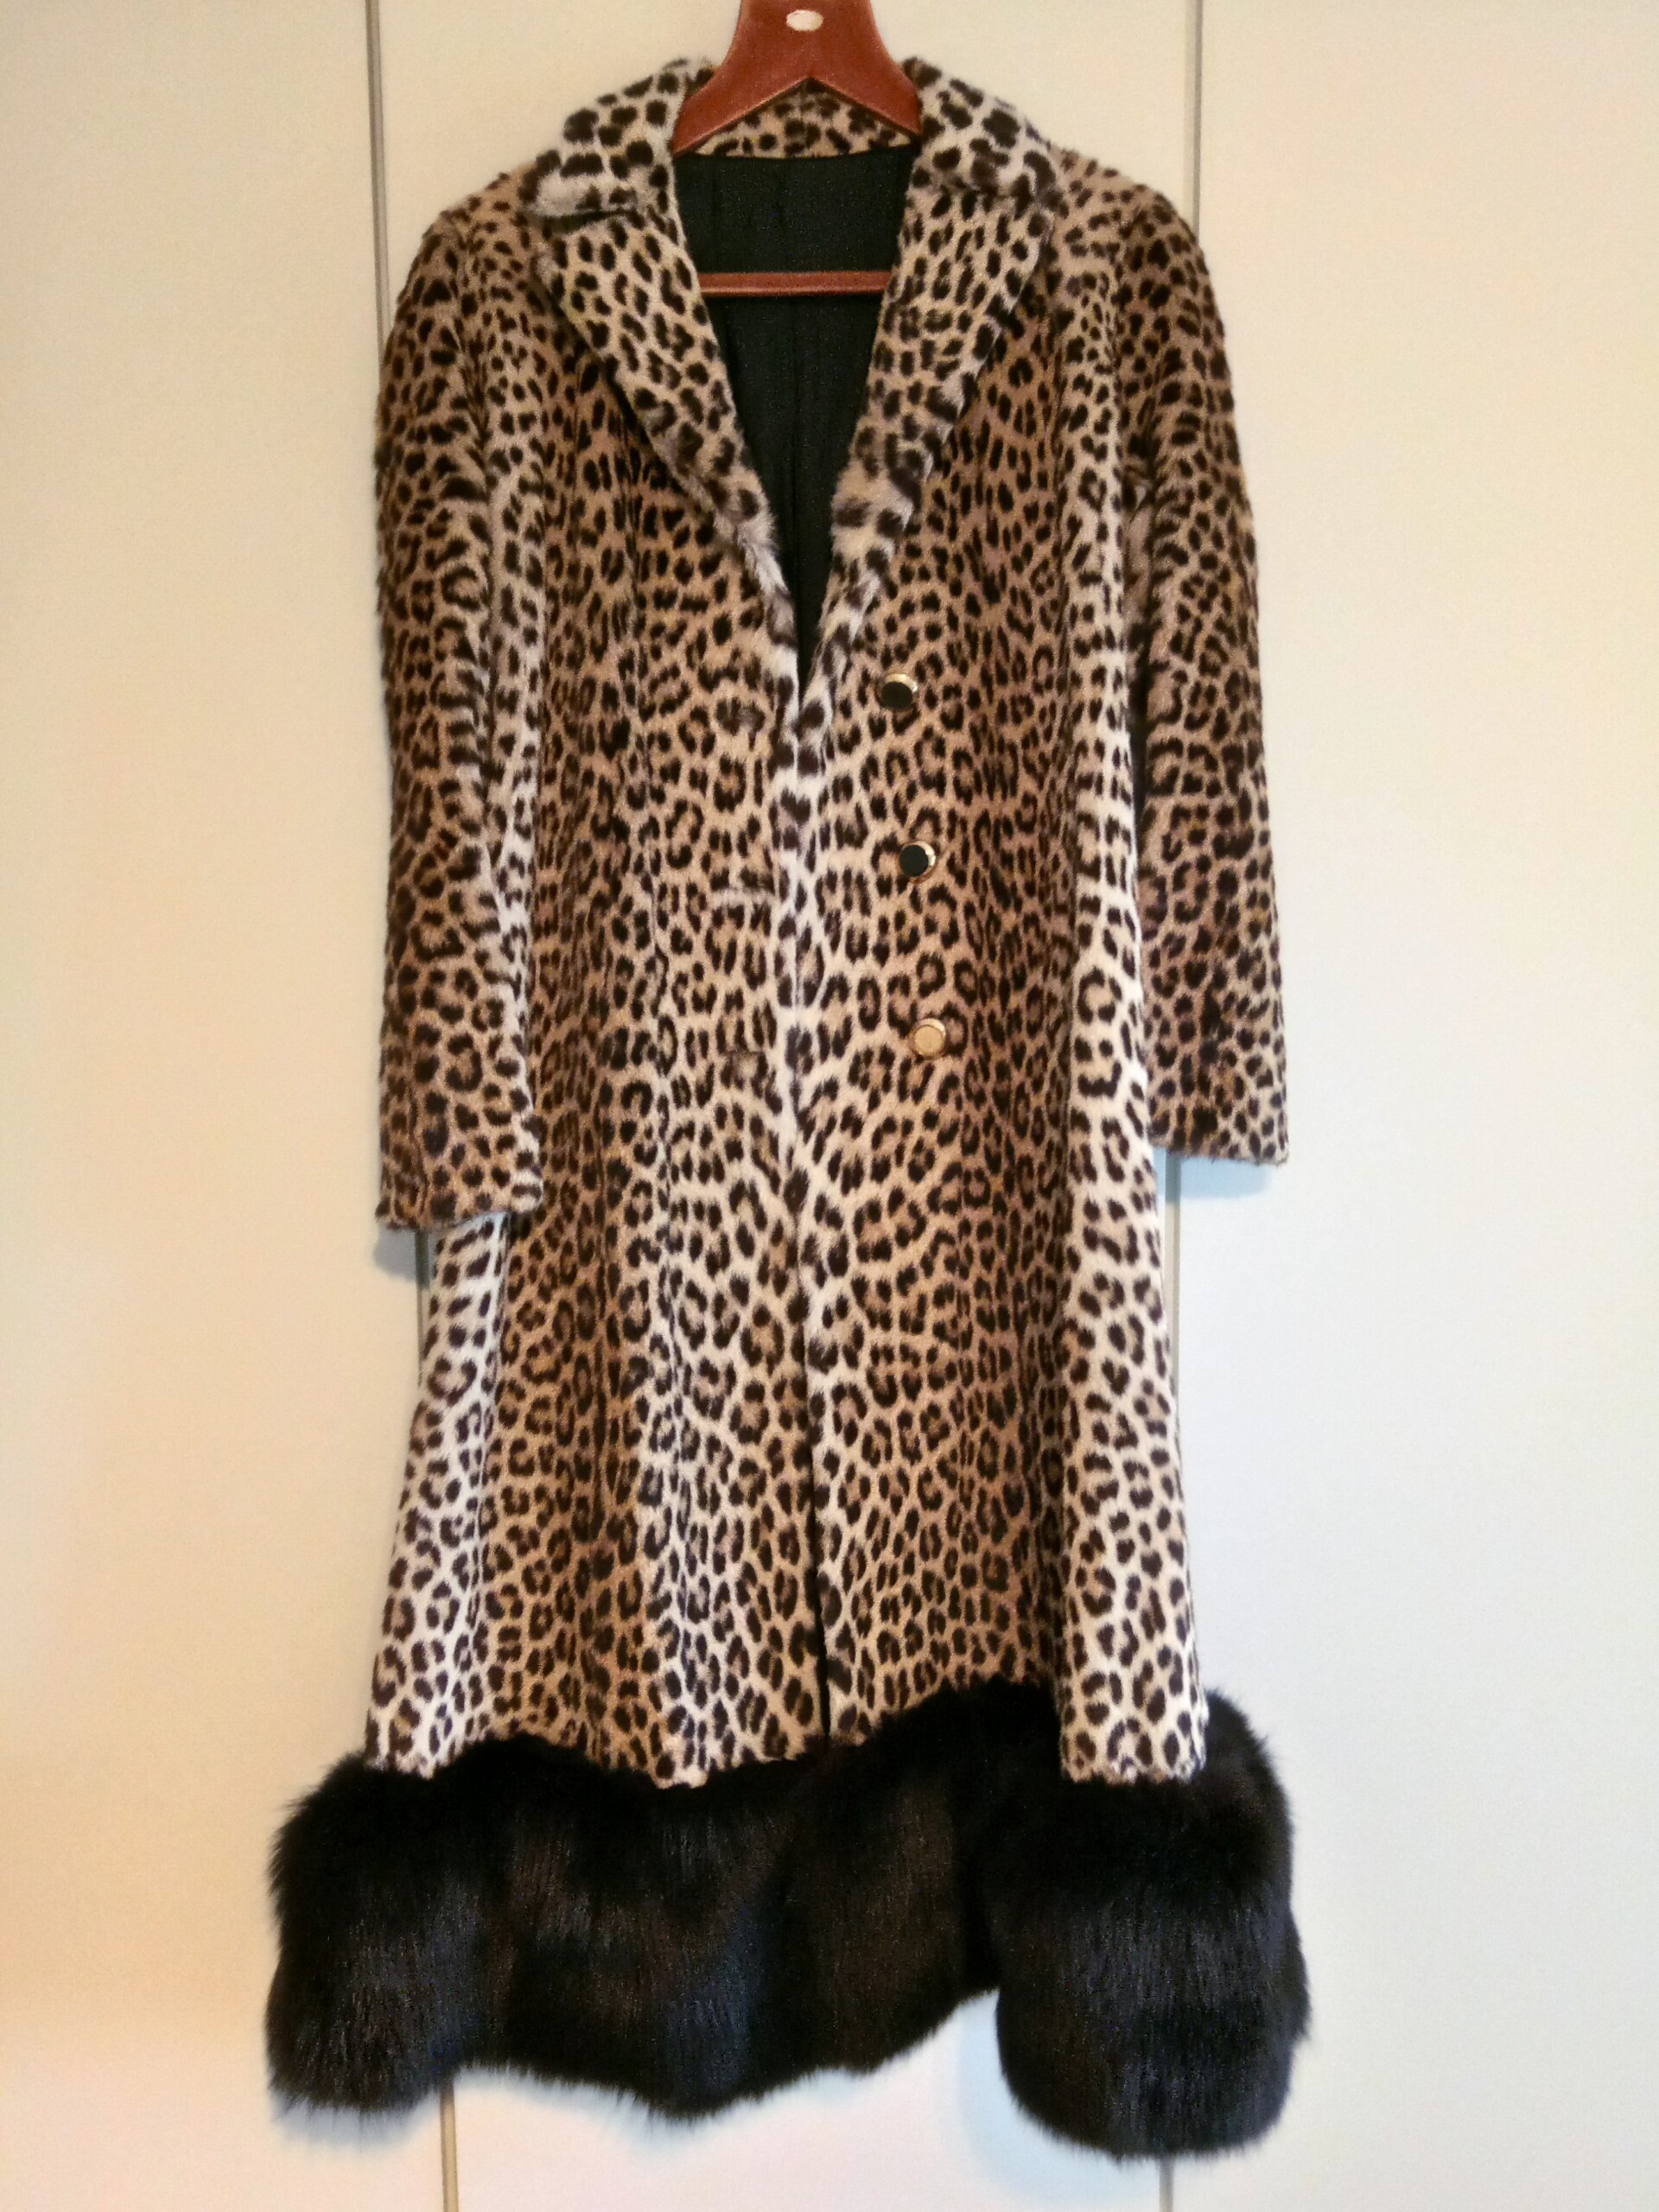 Real Snow Leopard Fur Coat Outlet Offers, Save 56% | jlcatj.gob.mx